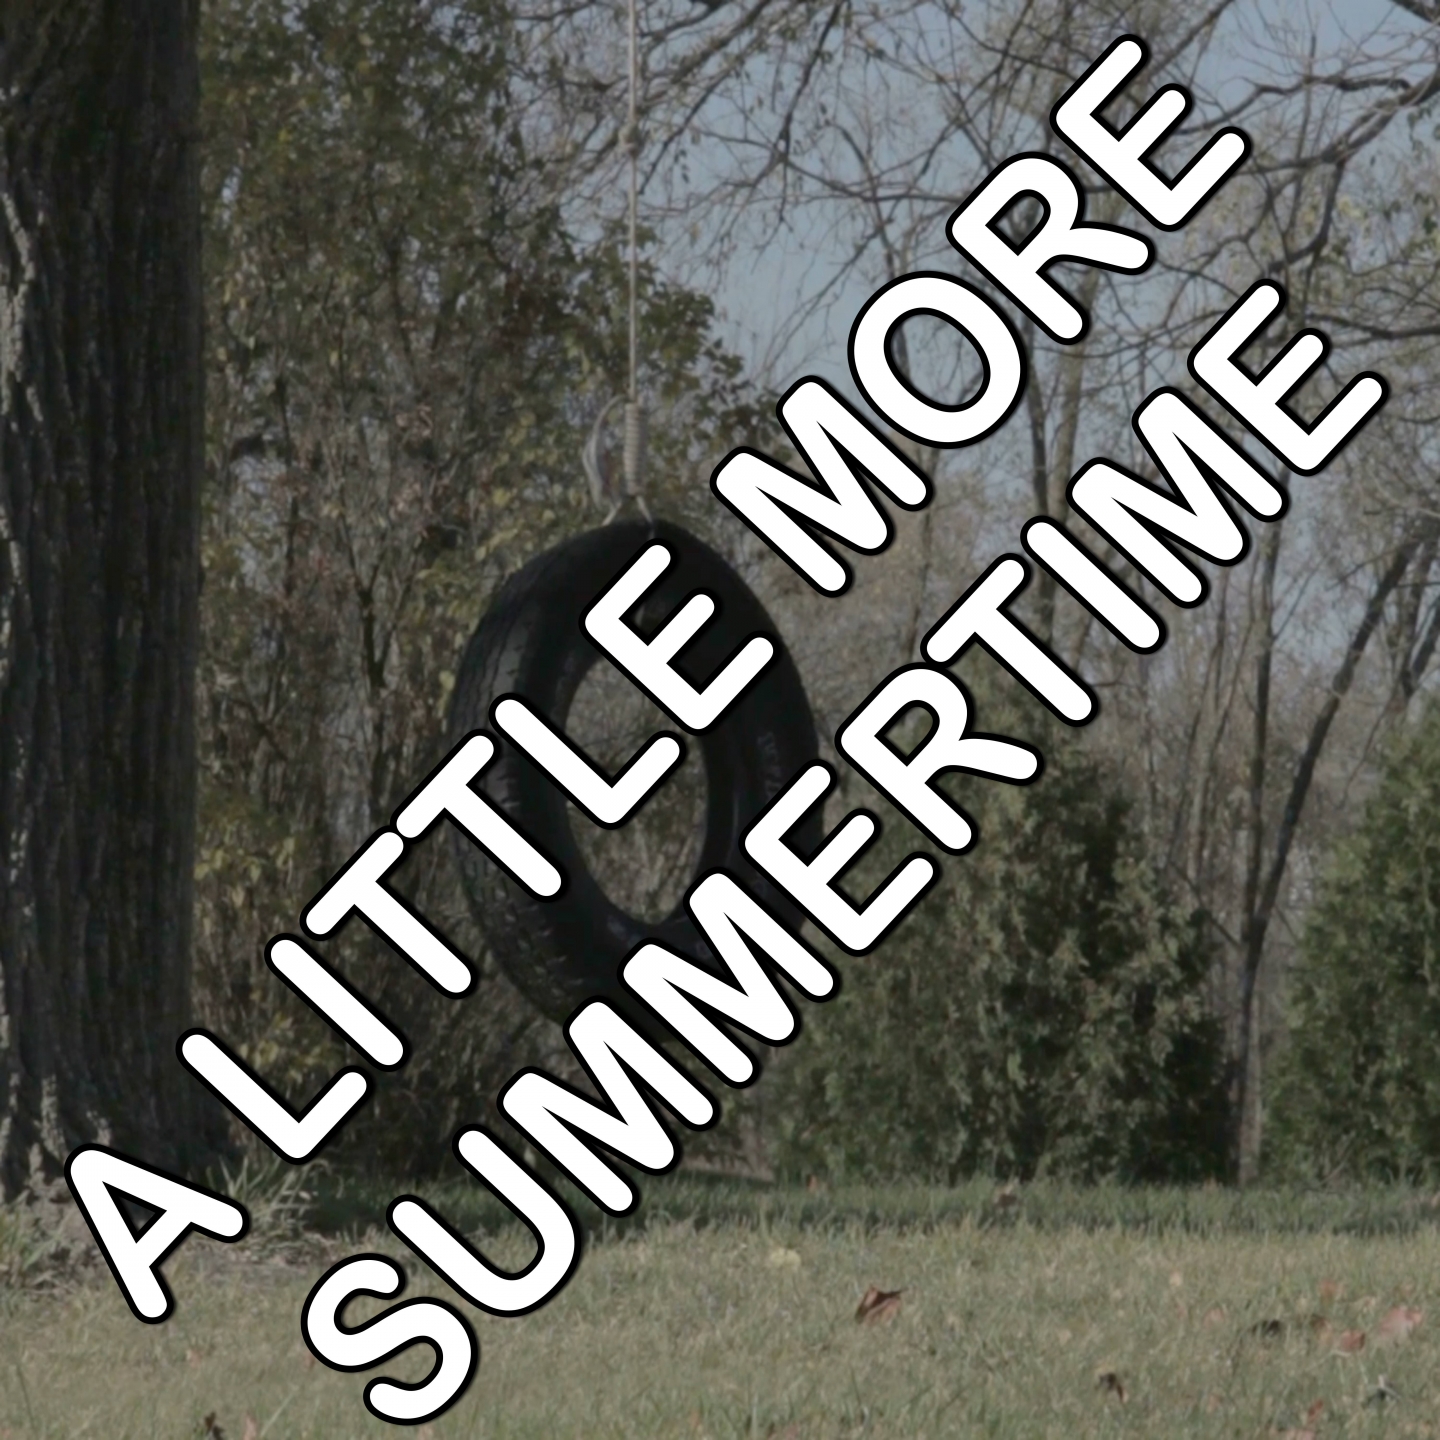 A Little More Summertime - Tribute to Jason Aldean (Instrumental Version)